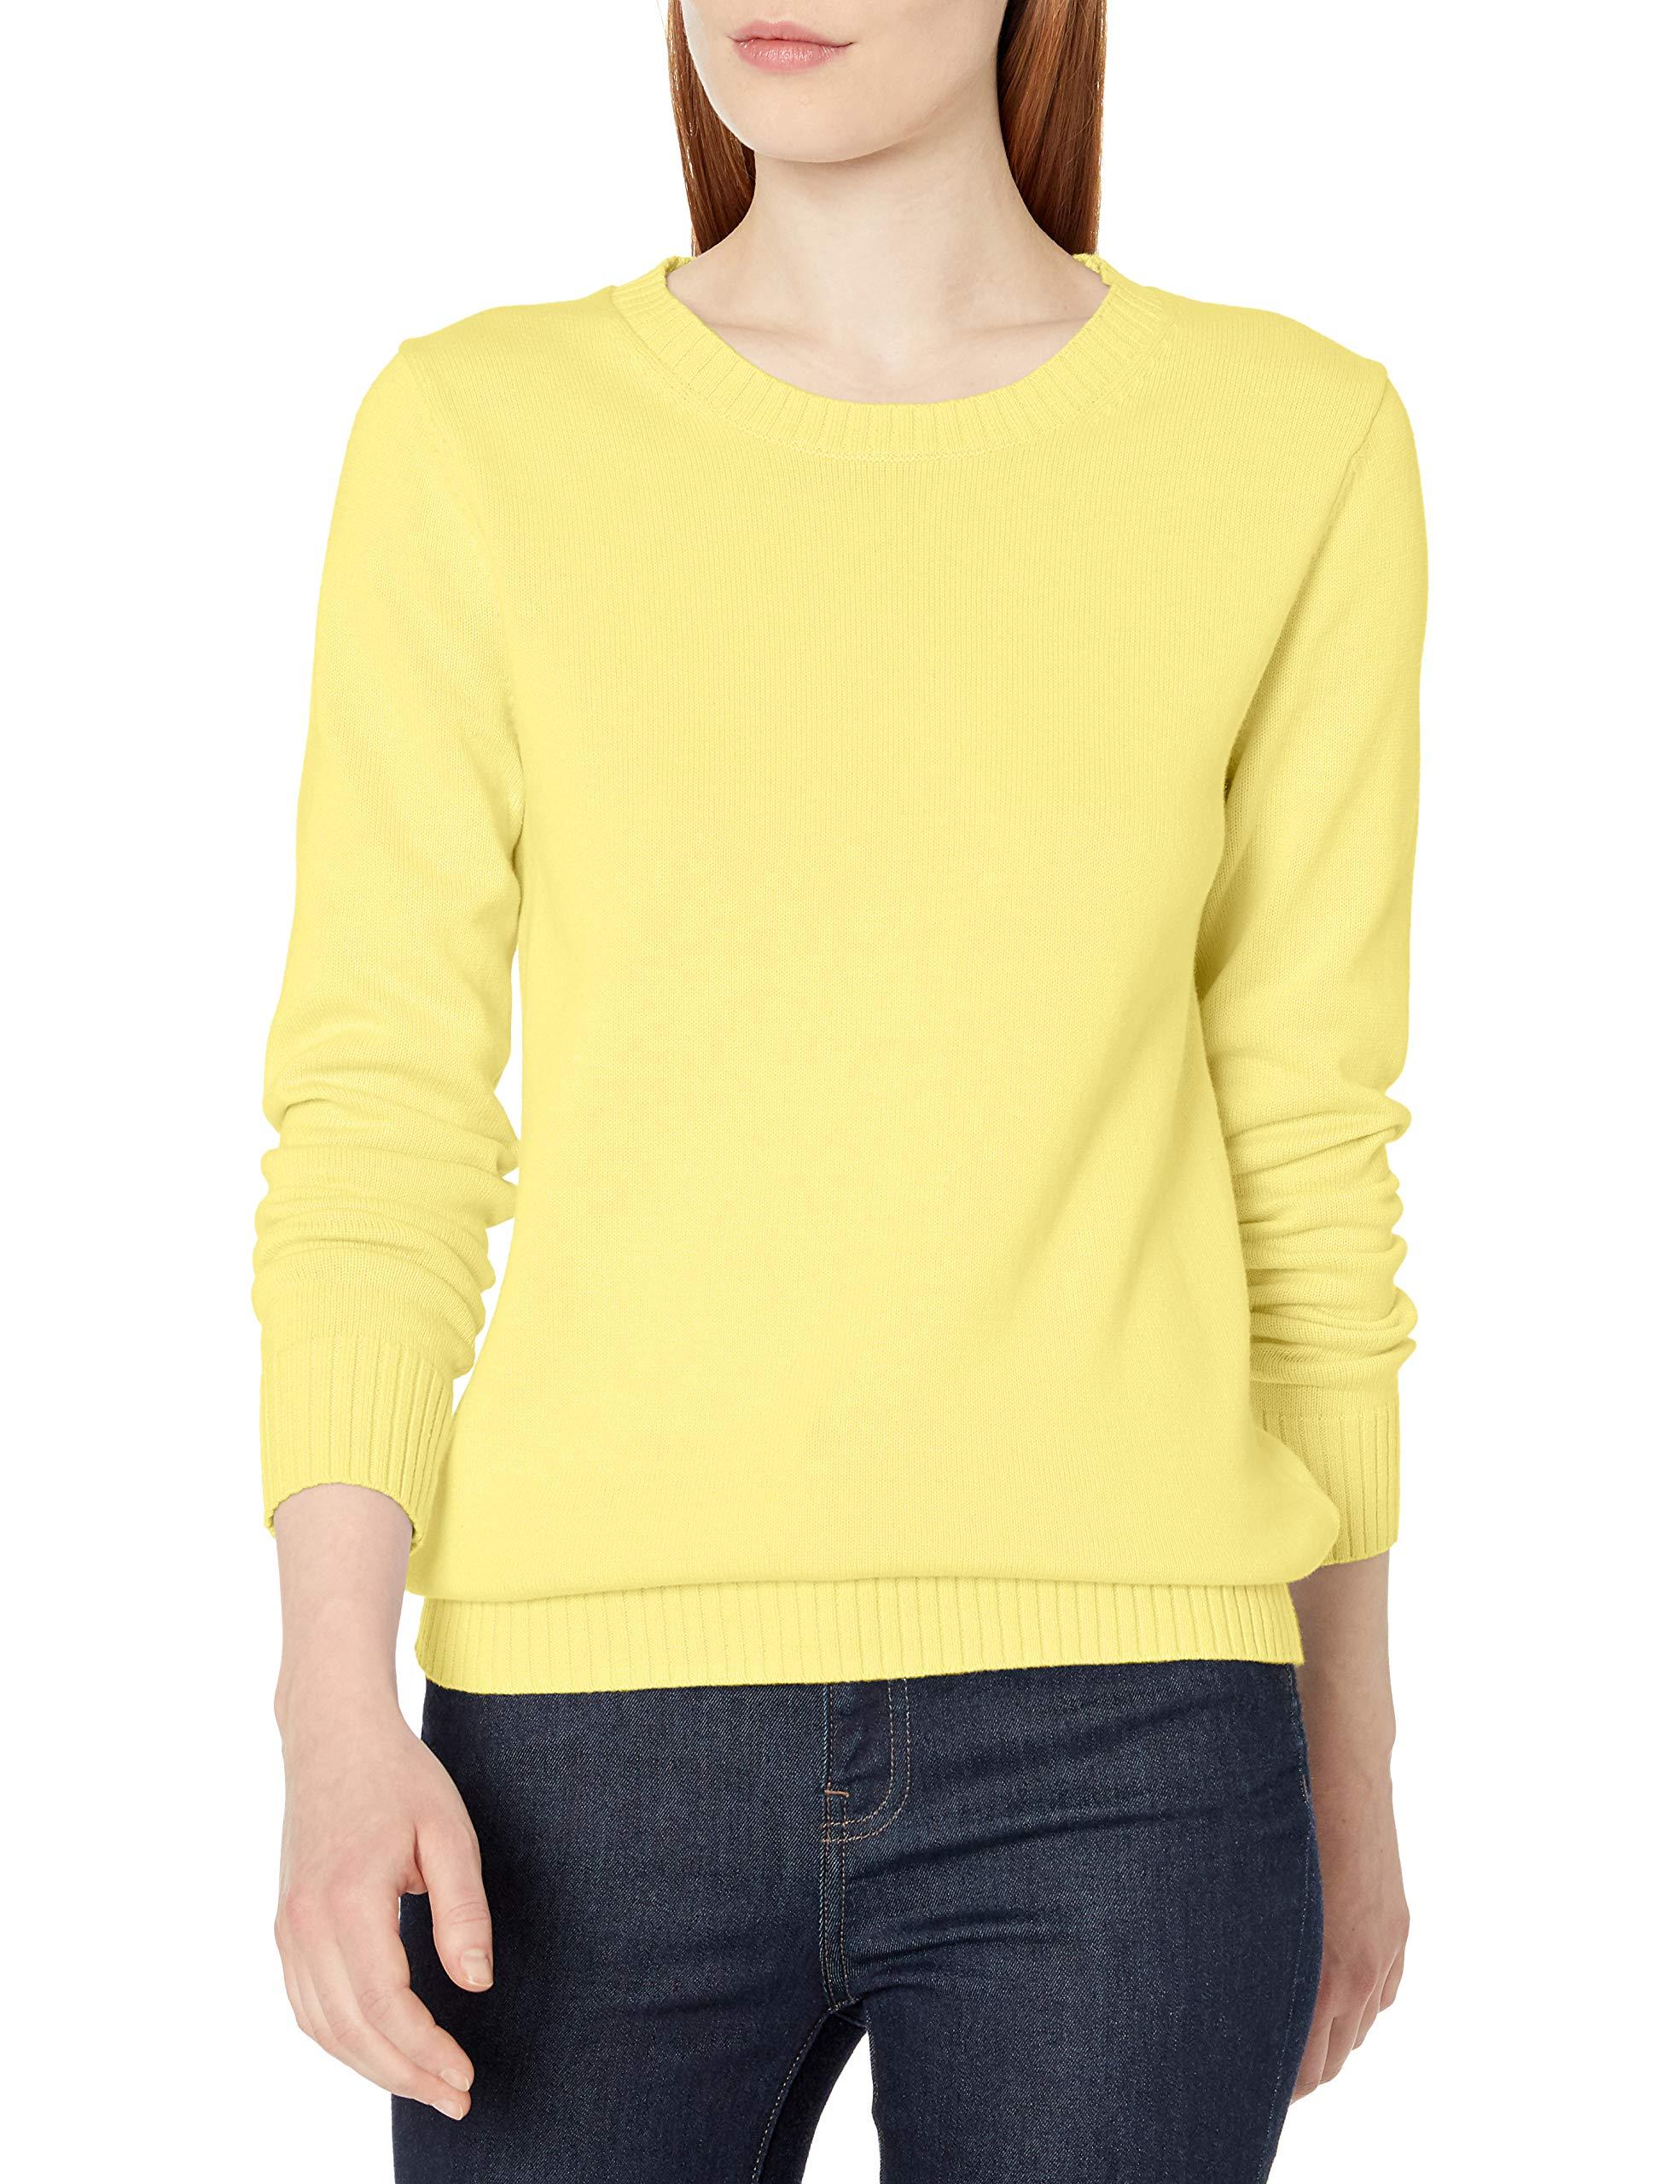 Amazon Essentials 100% Cotton Crewneck Sweater in Yellow - Lyst